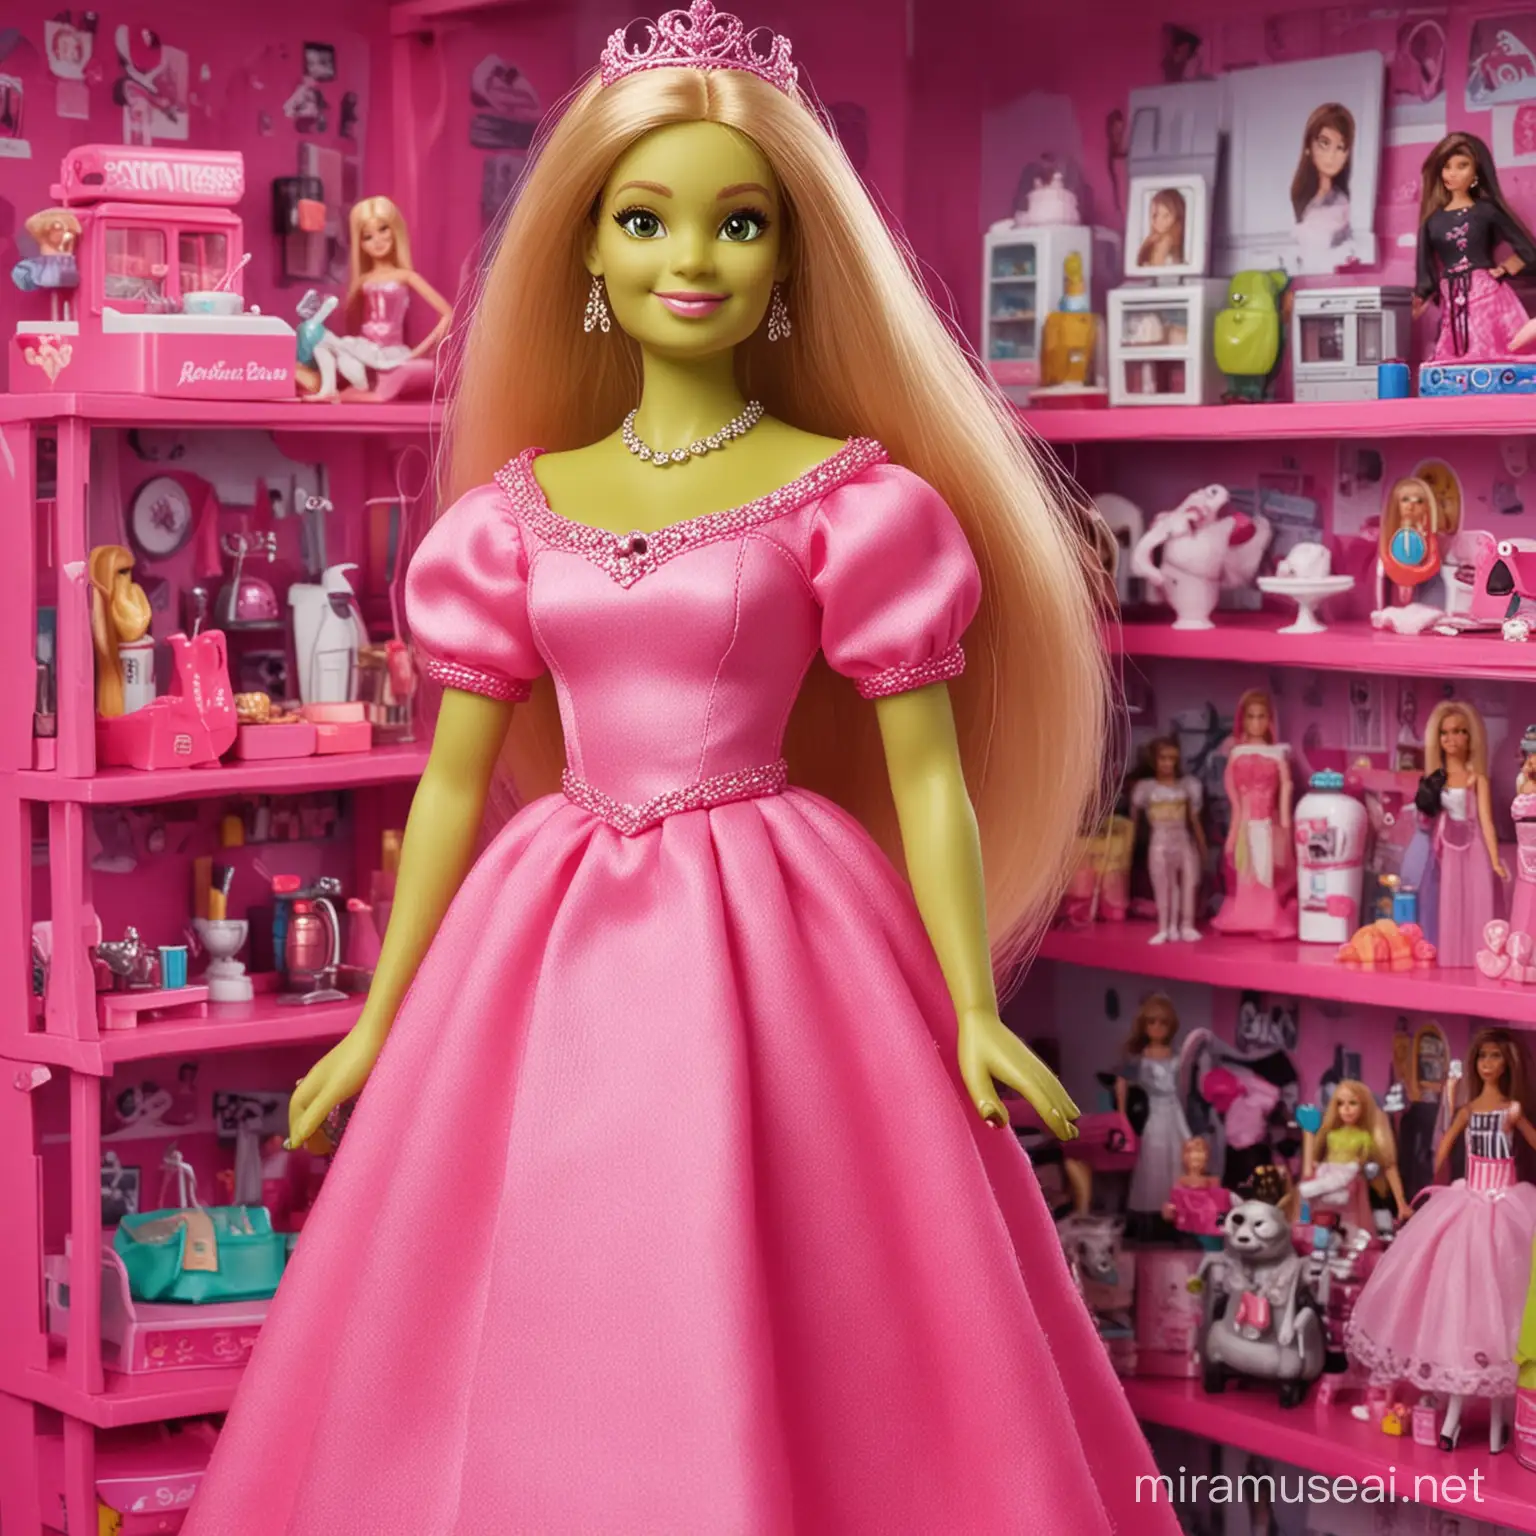 Shrek Transformed into Barbie in a Colorful Barbie World